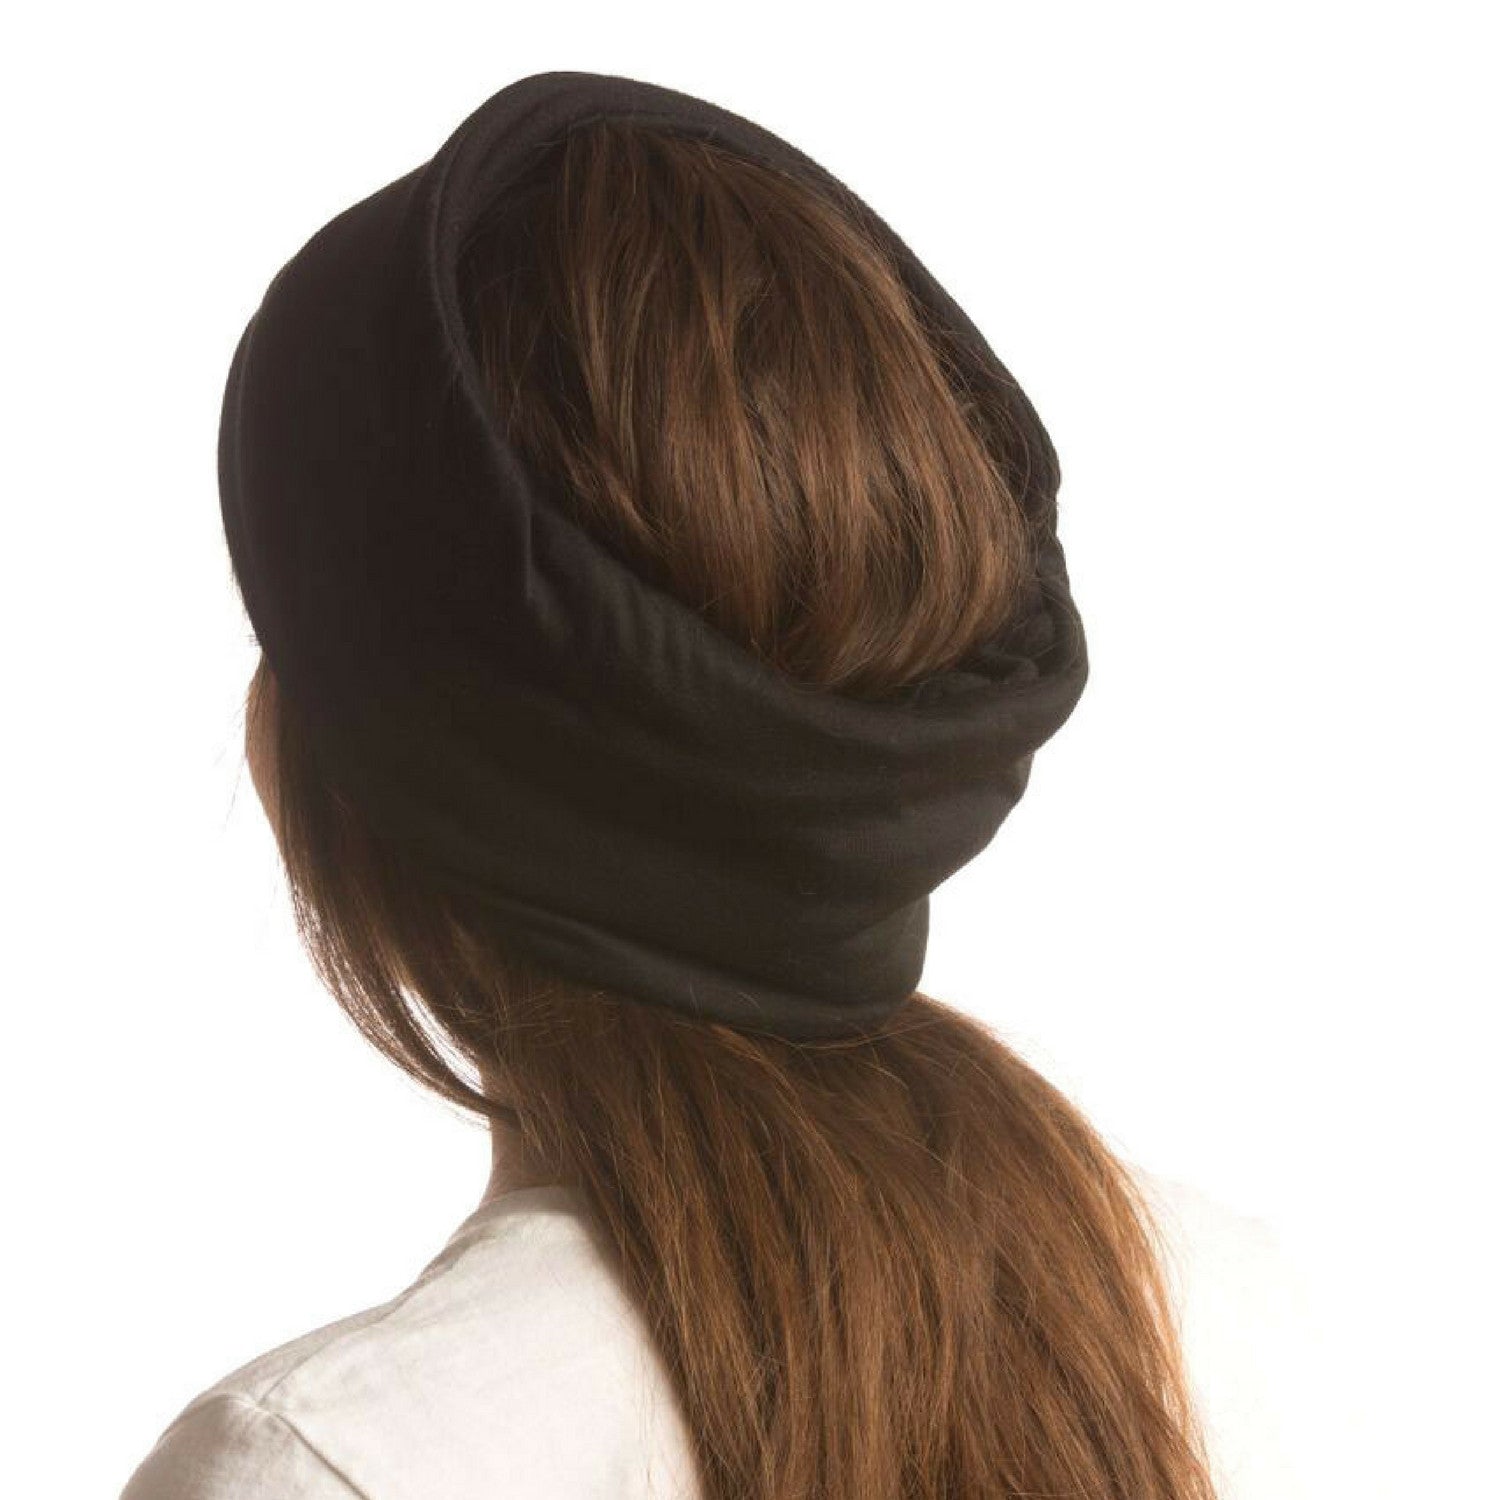 SHOLDIT Convertible Neck Gaiter with Pocket Black Headband